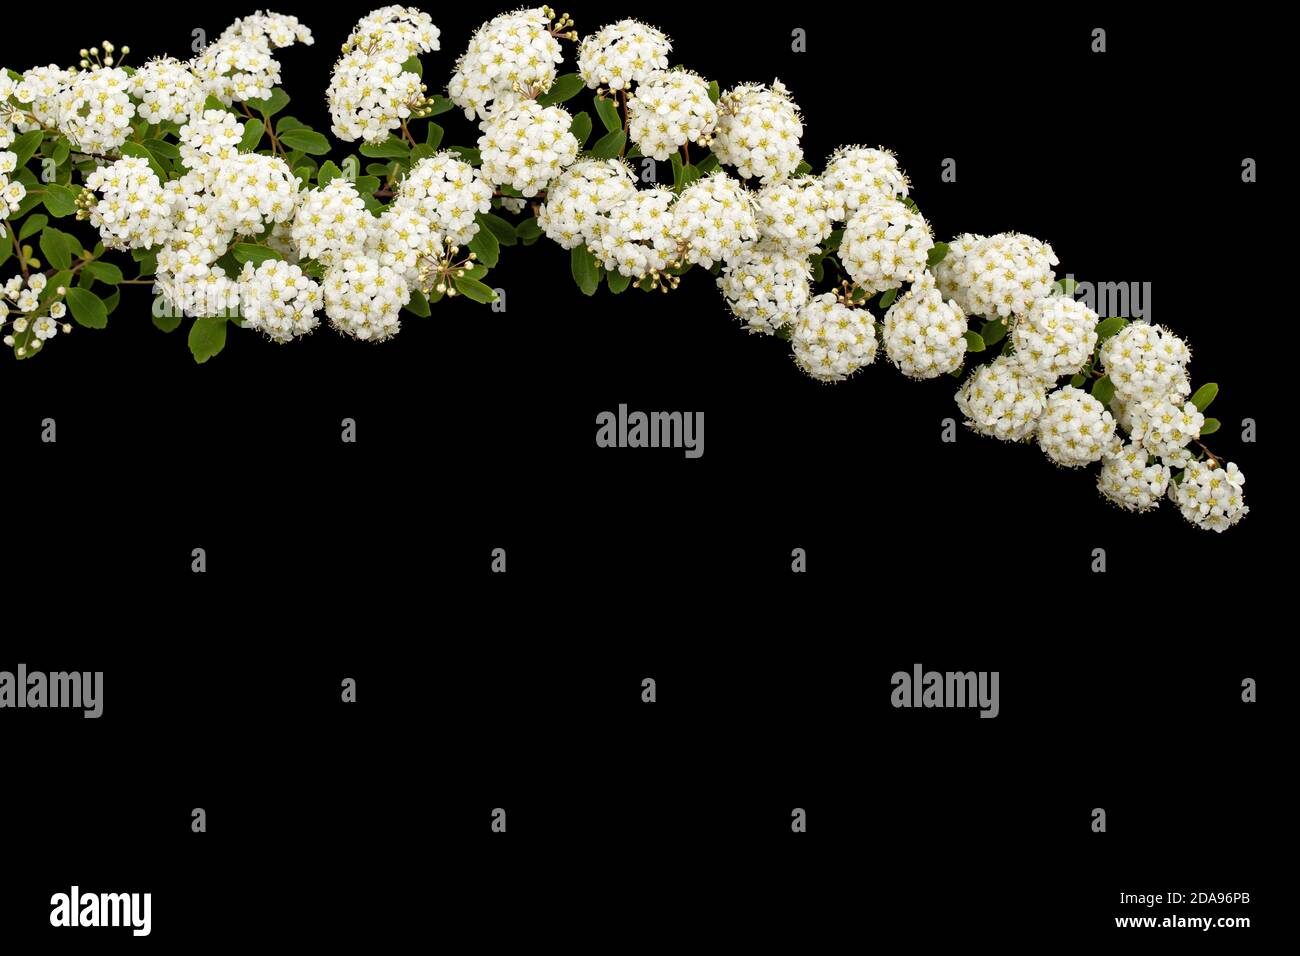 White flowers of Spirea aguta or Brides wreath, isolated on black background Stock Photo